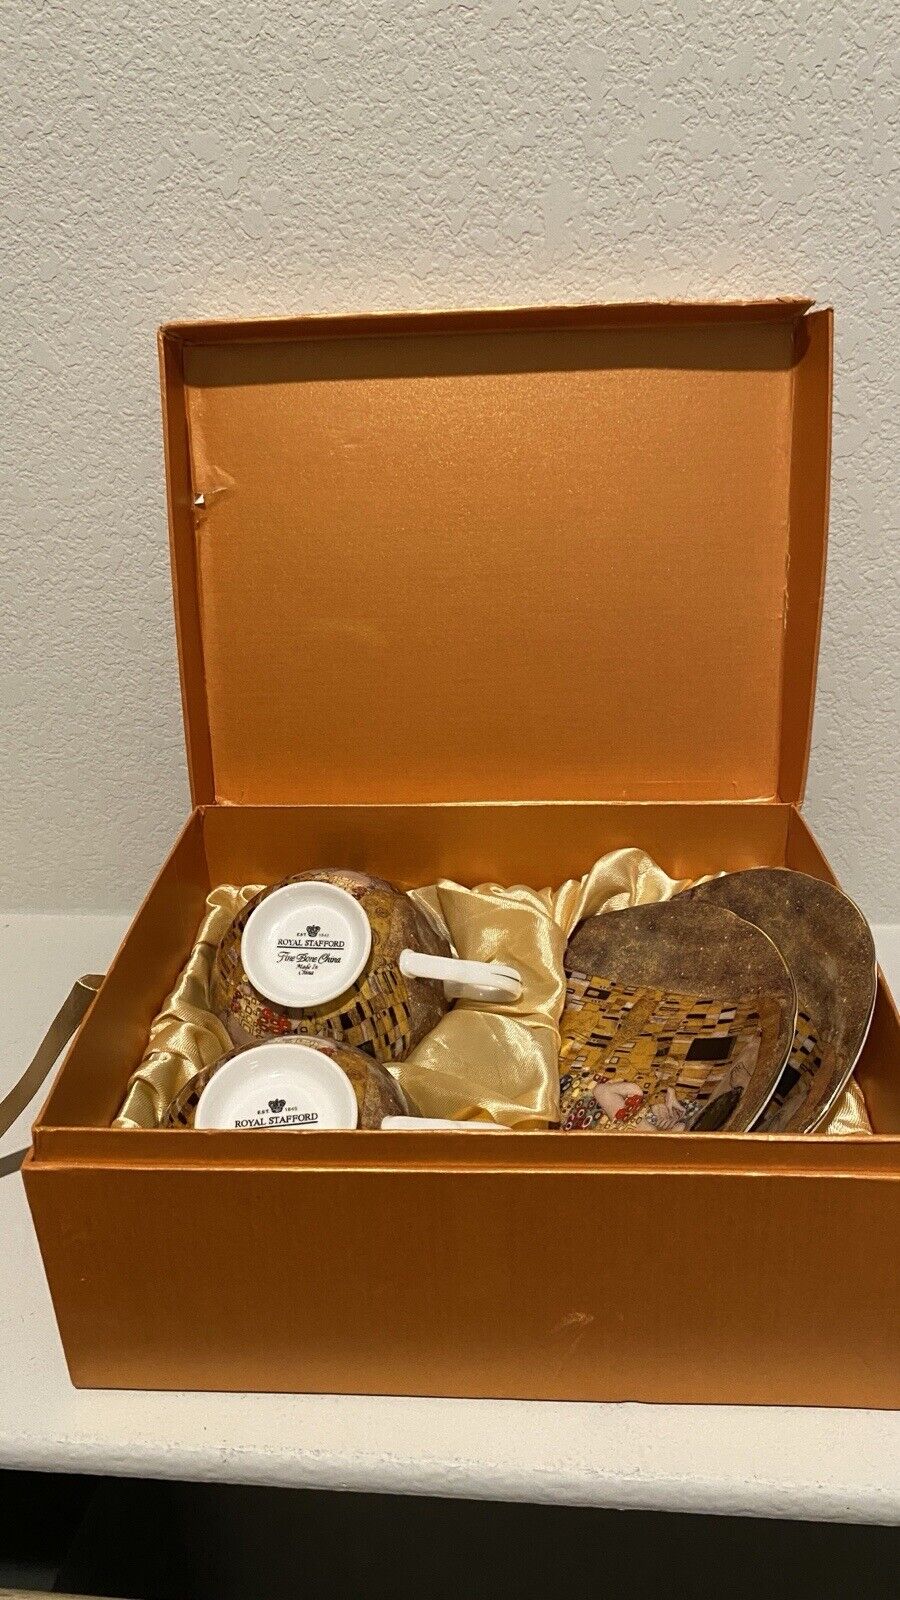 Royal Stafford Teacups with Saucers Gustav Klimt the Kiss Boxed Set Retro